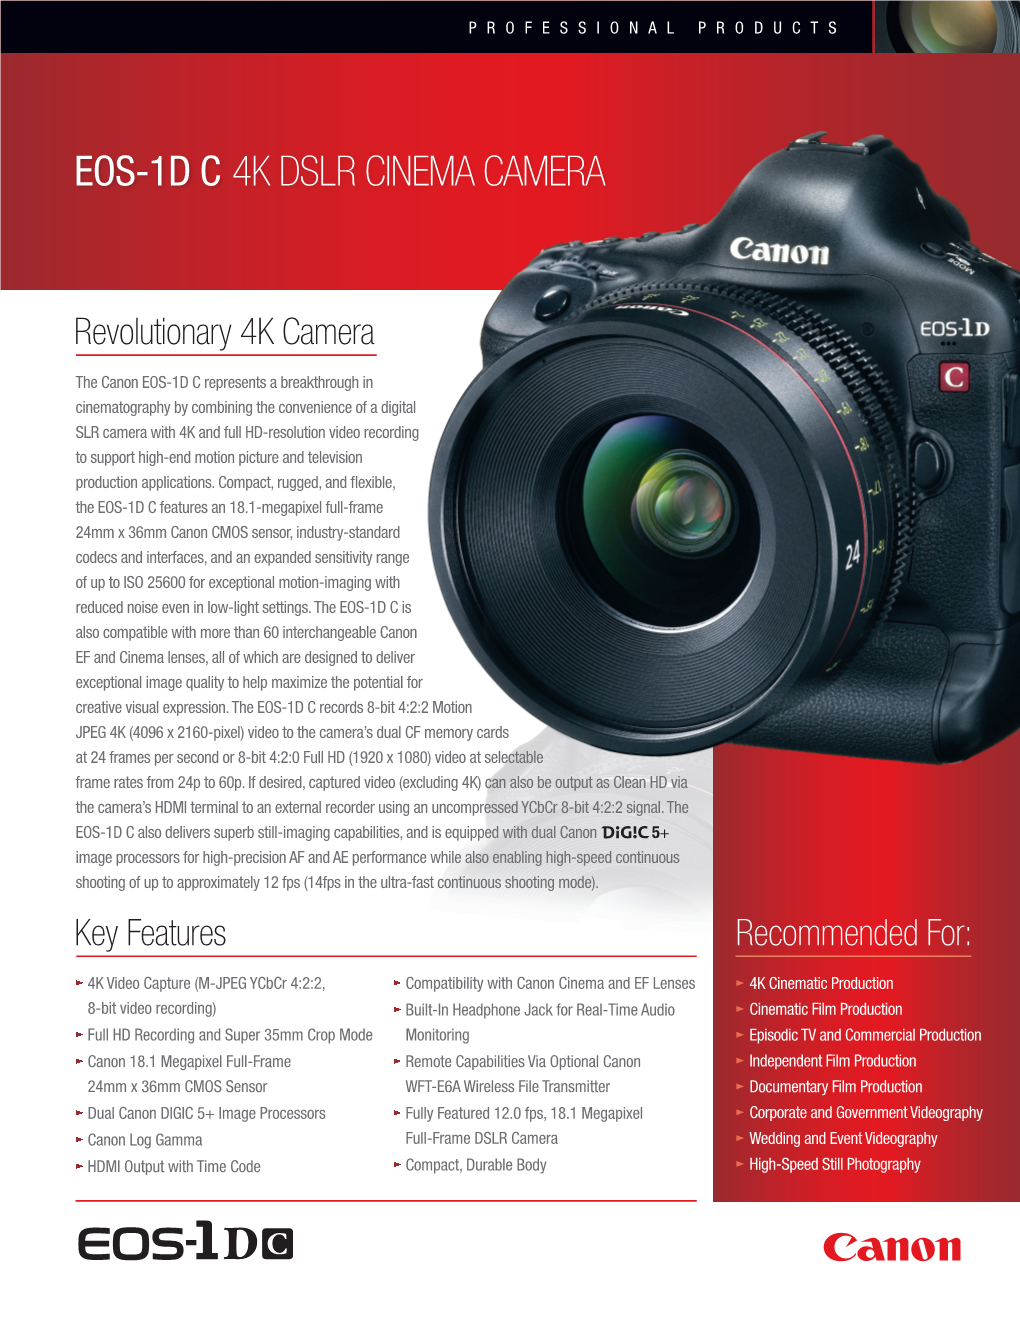 Eos-1D C 4K Dslr Cinema Camera